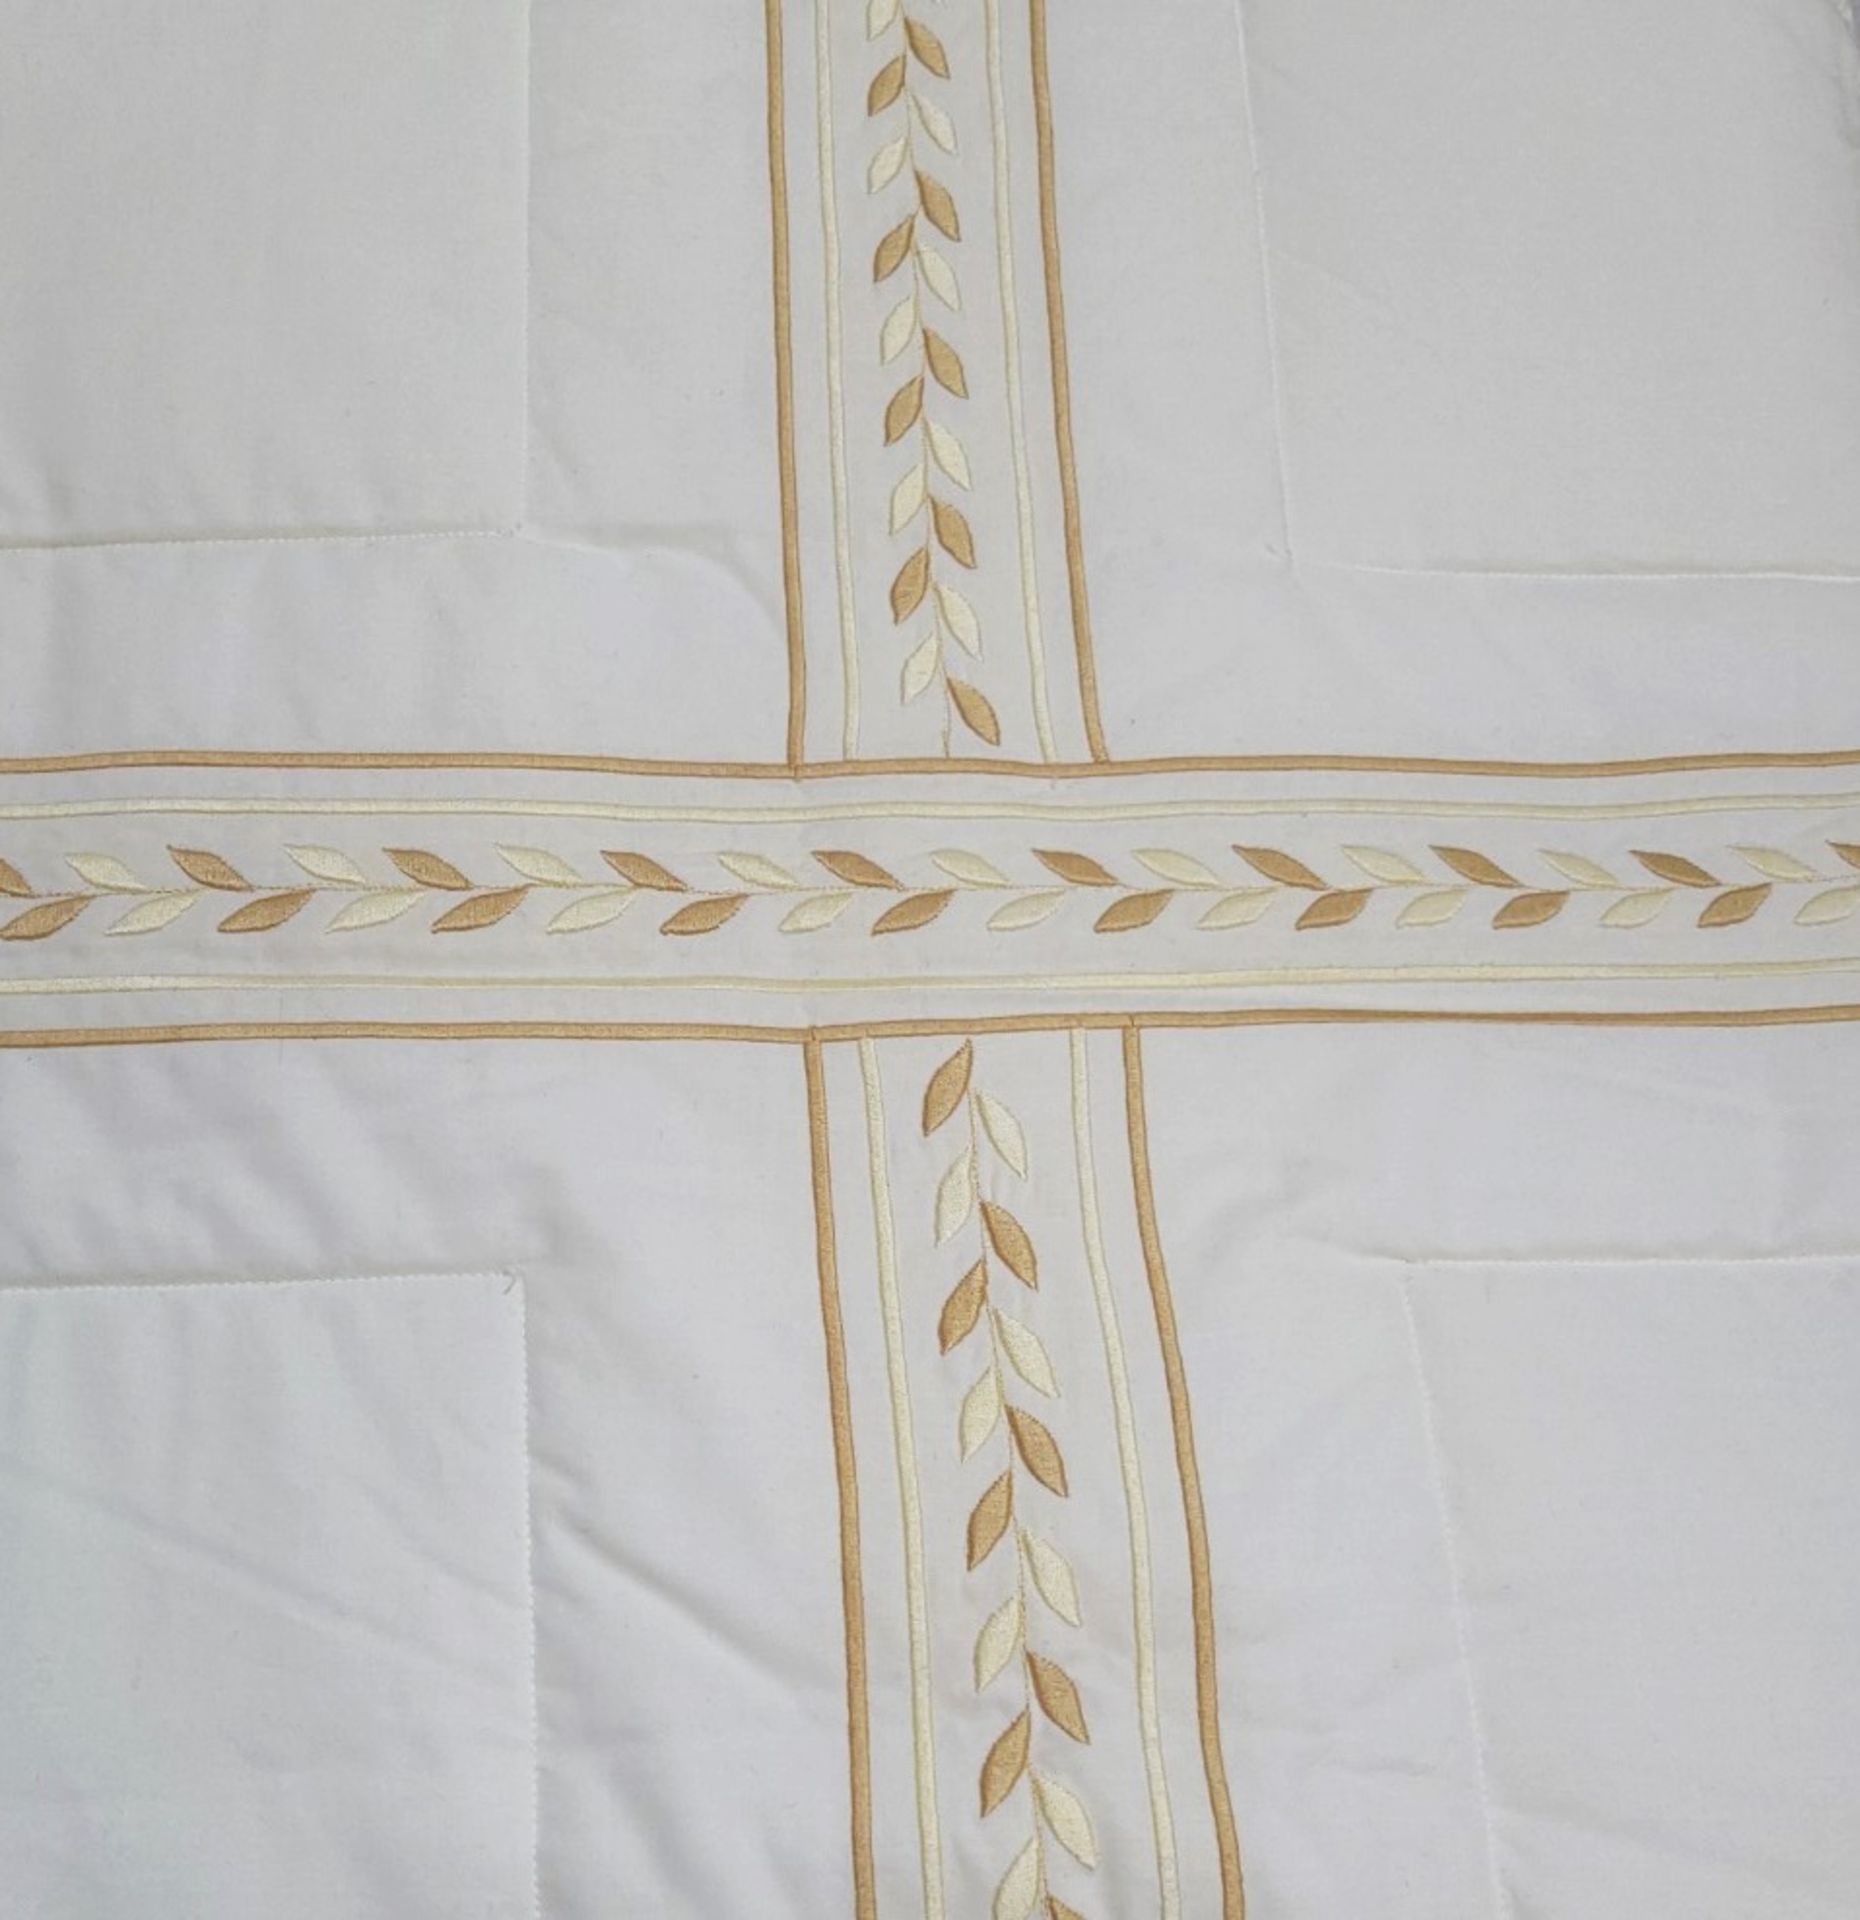 1 x PRATESI Impero Gold Embroidery Quilt in Angel Skin (240x260cm) - Original Price £1,580.00 - Image 4 of 5